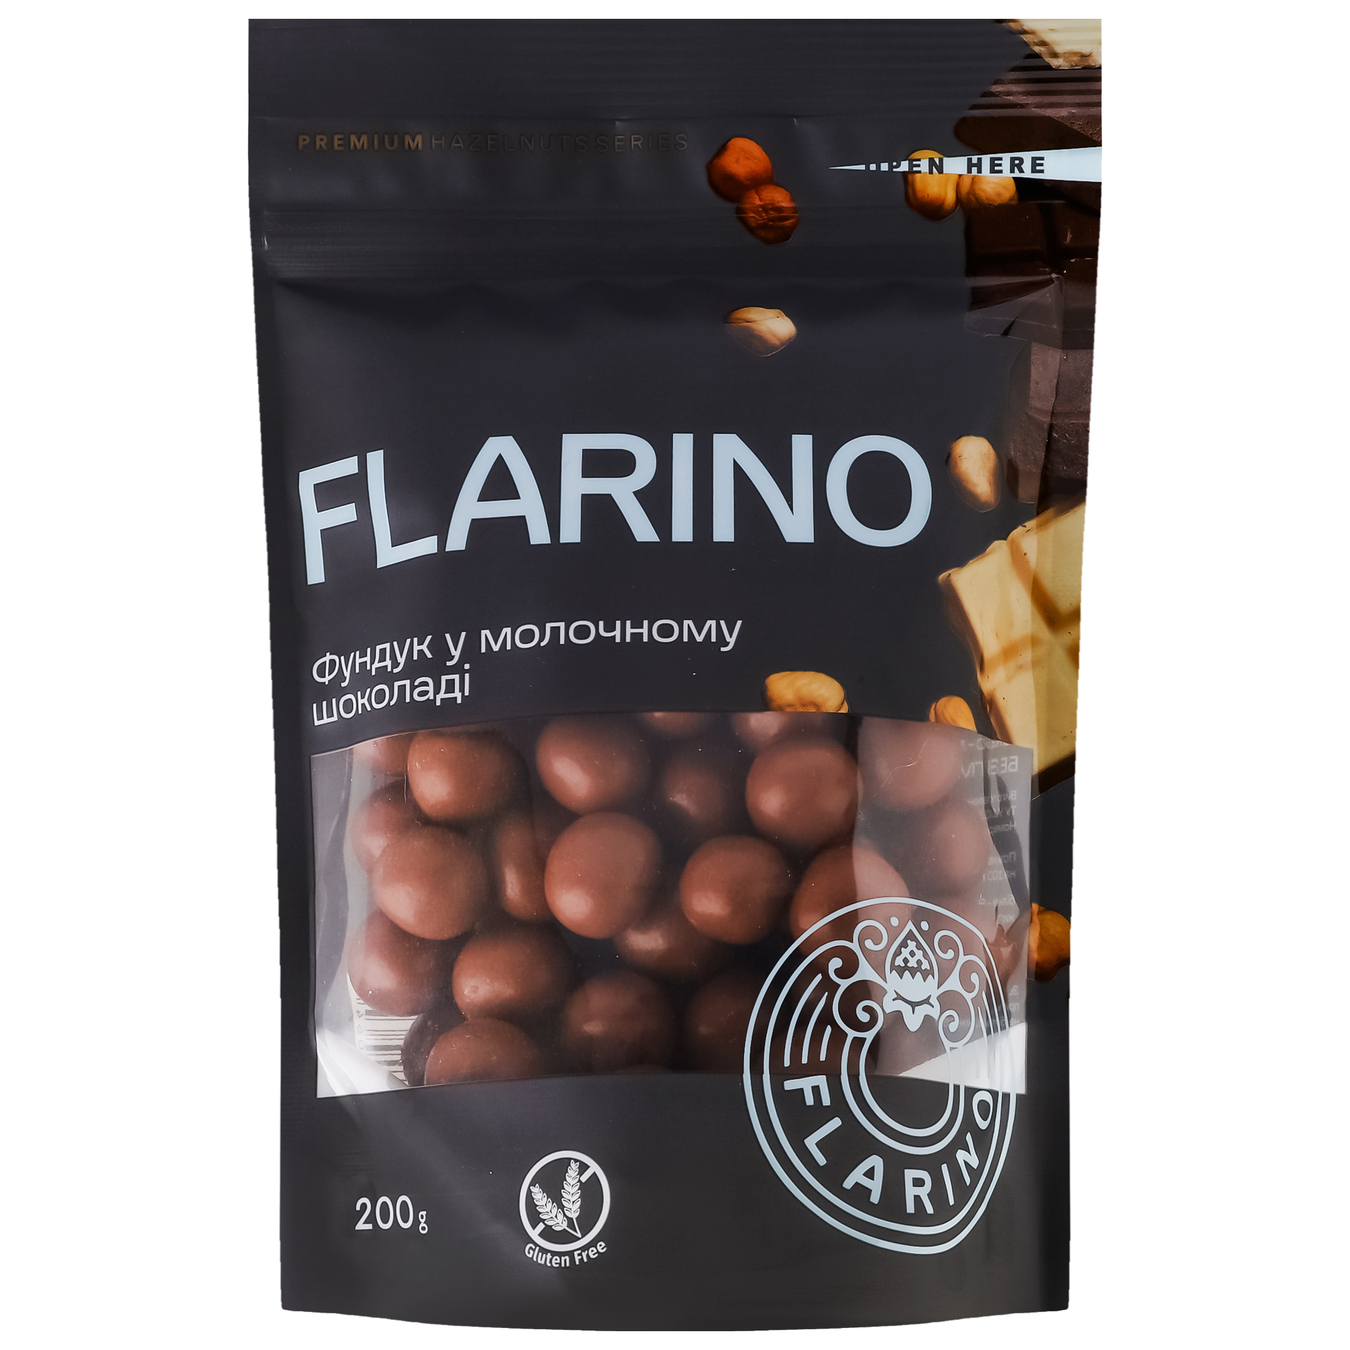 Flarino hazelnuts in milk chocolate 200g